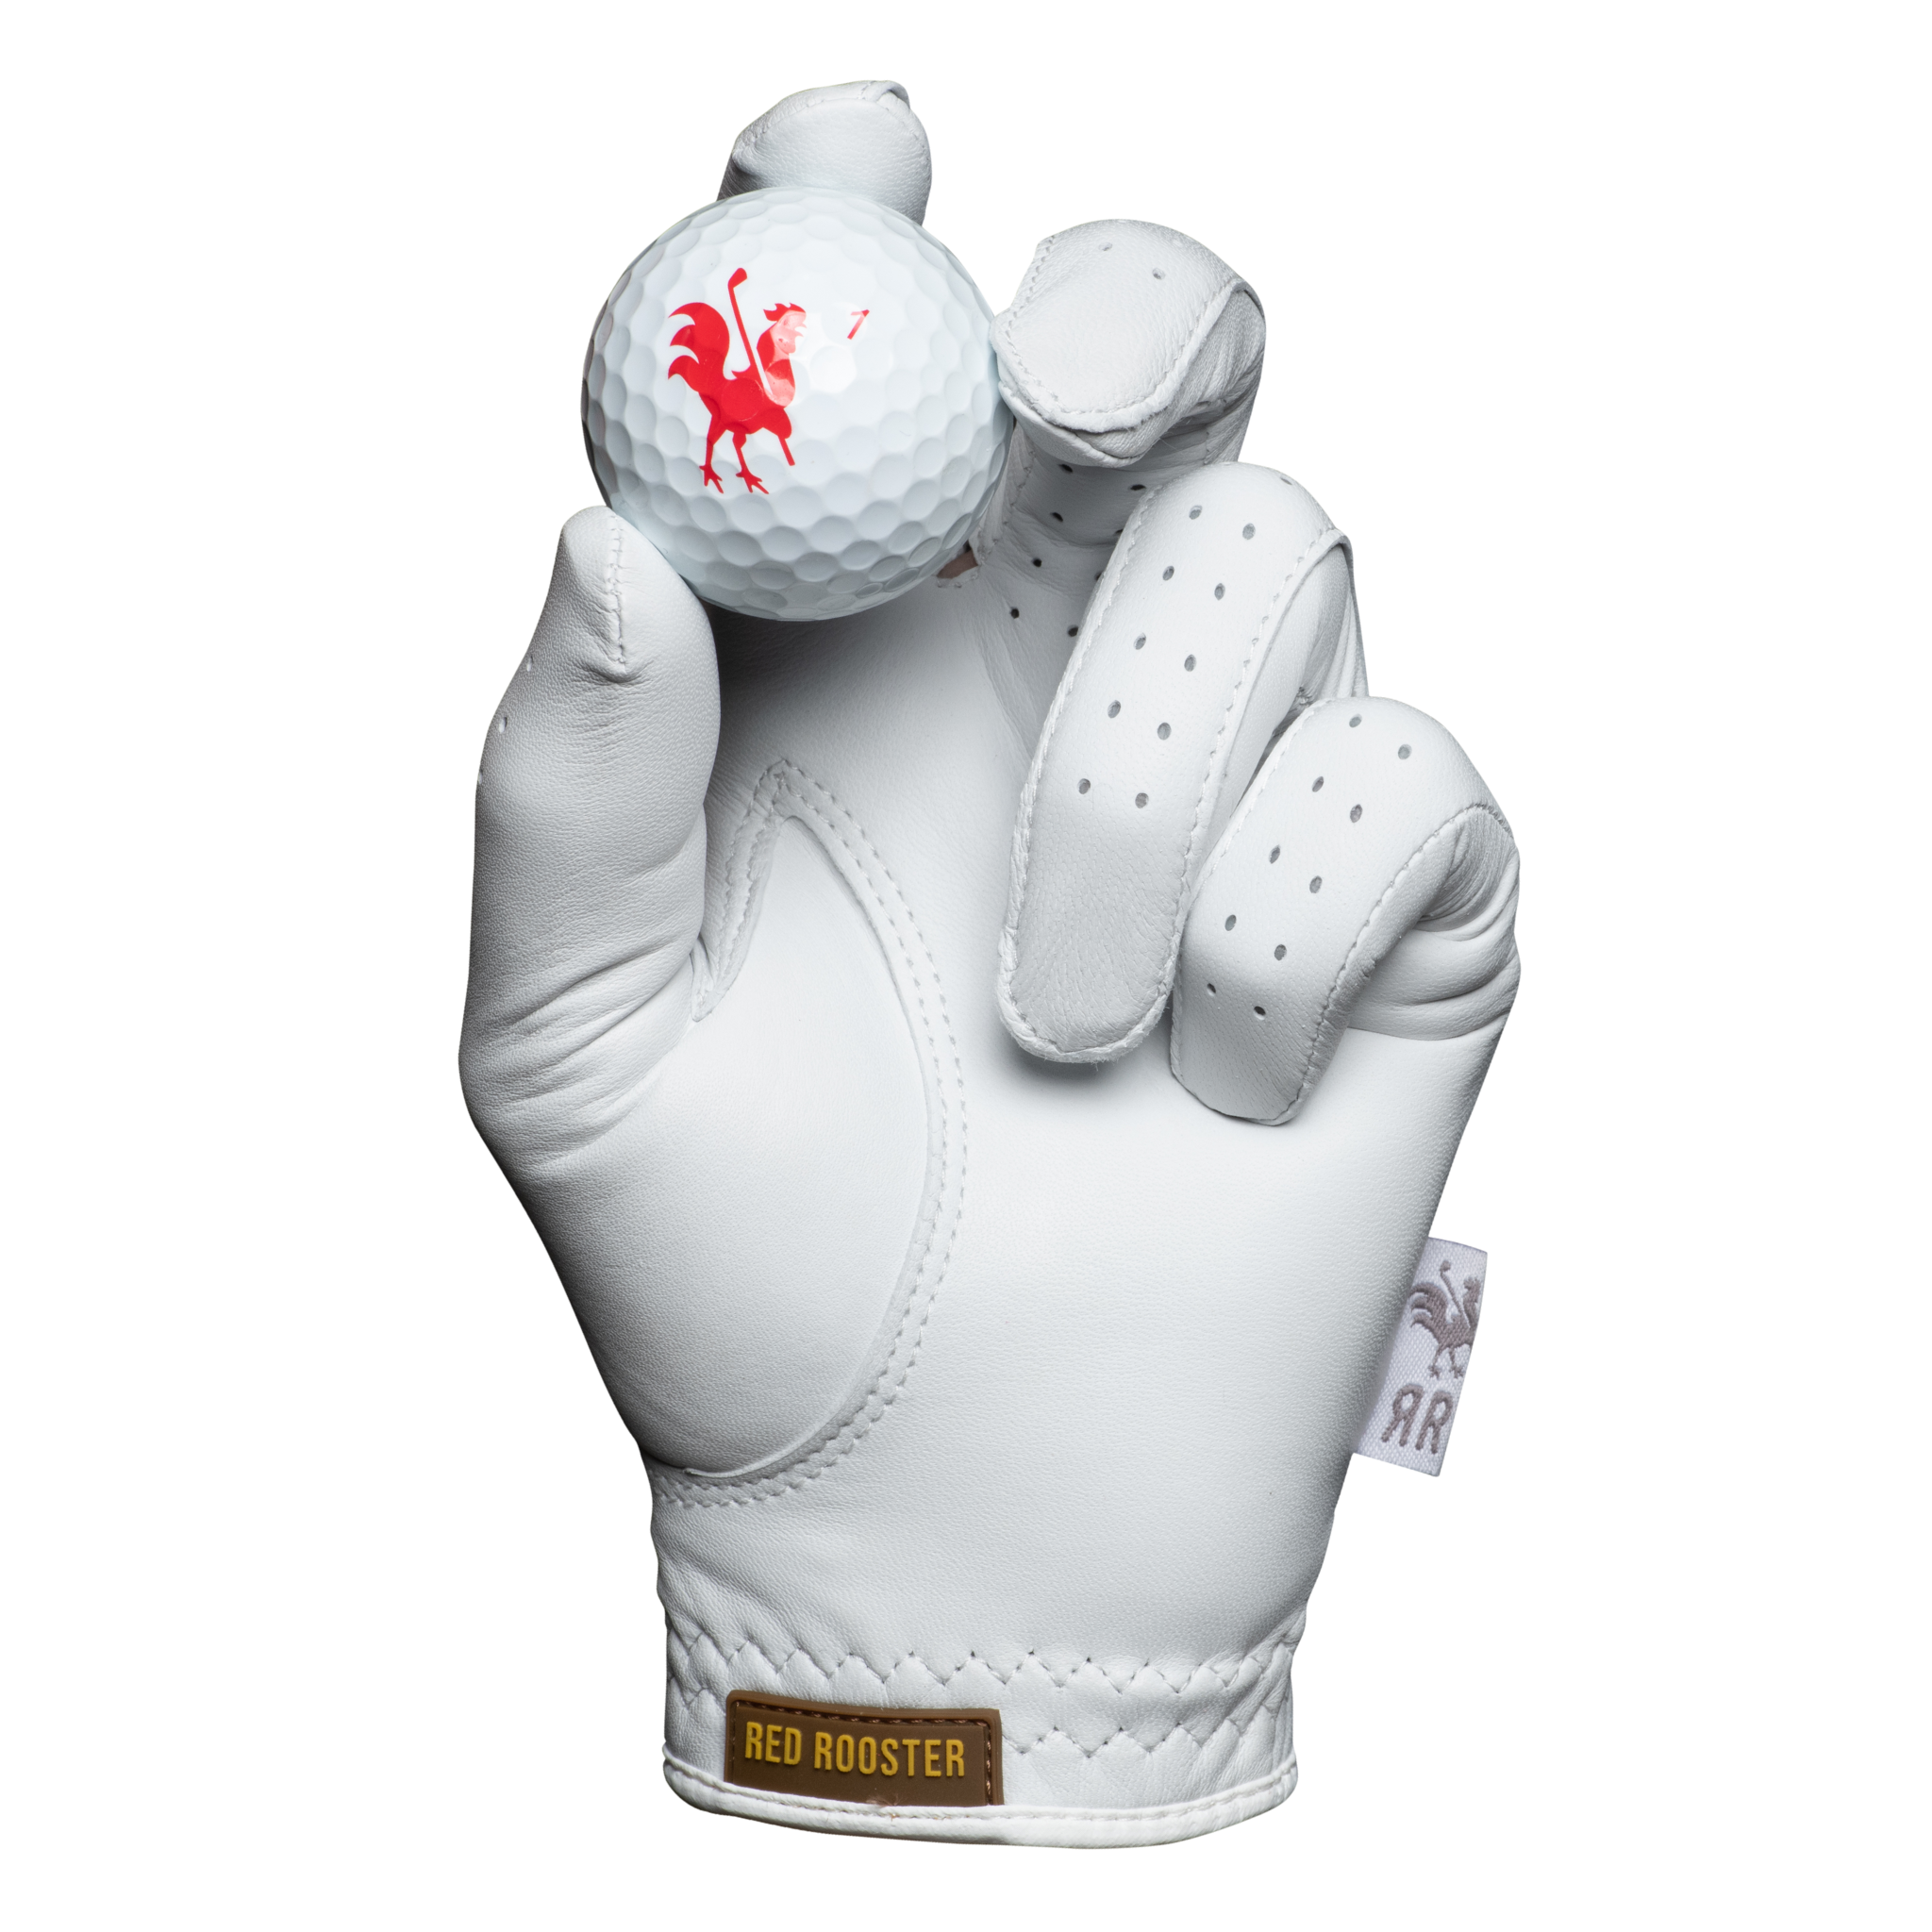 The Comet golf glove holding golf ball